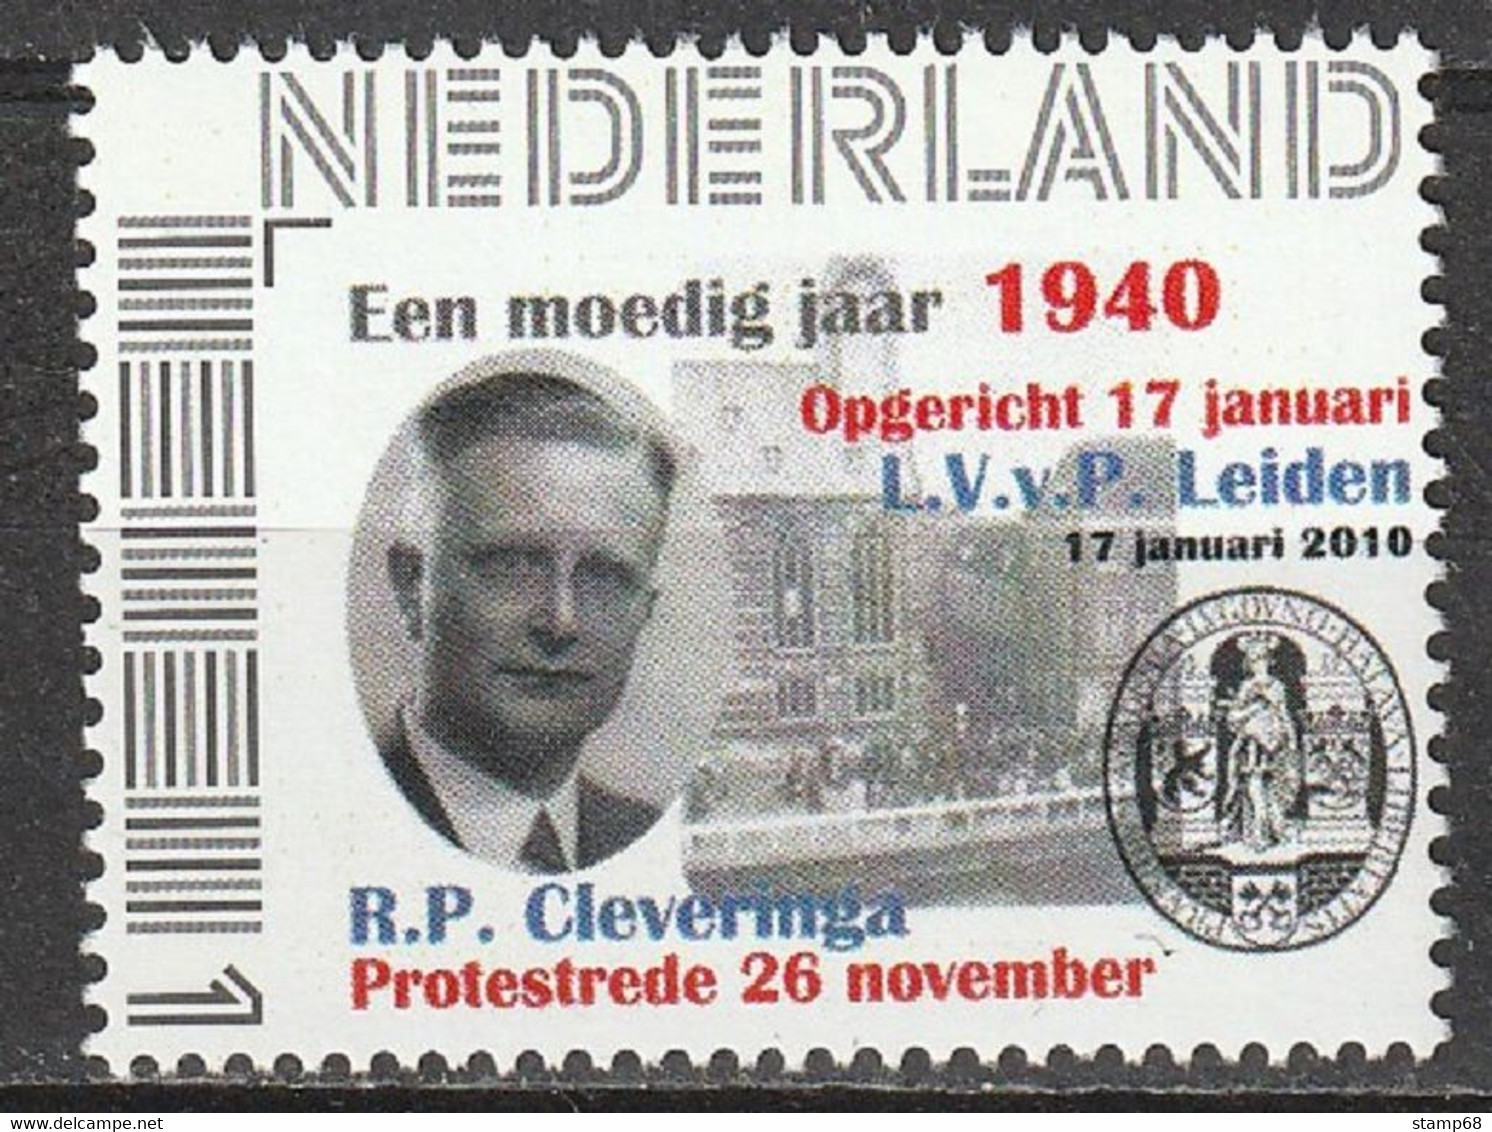 Nederland NVPH 2751 Persoonlijke Zegels Protestrede Cleveringa Oprichting LvVP Leiden 1940-2010 MNH Postfris - Timbres Personnalisés